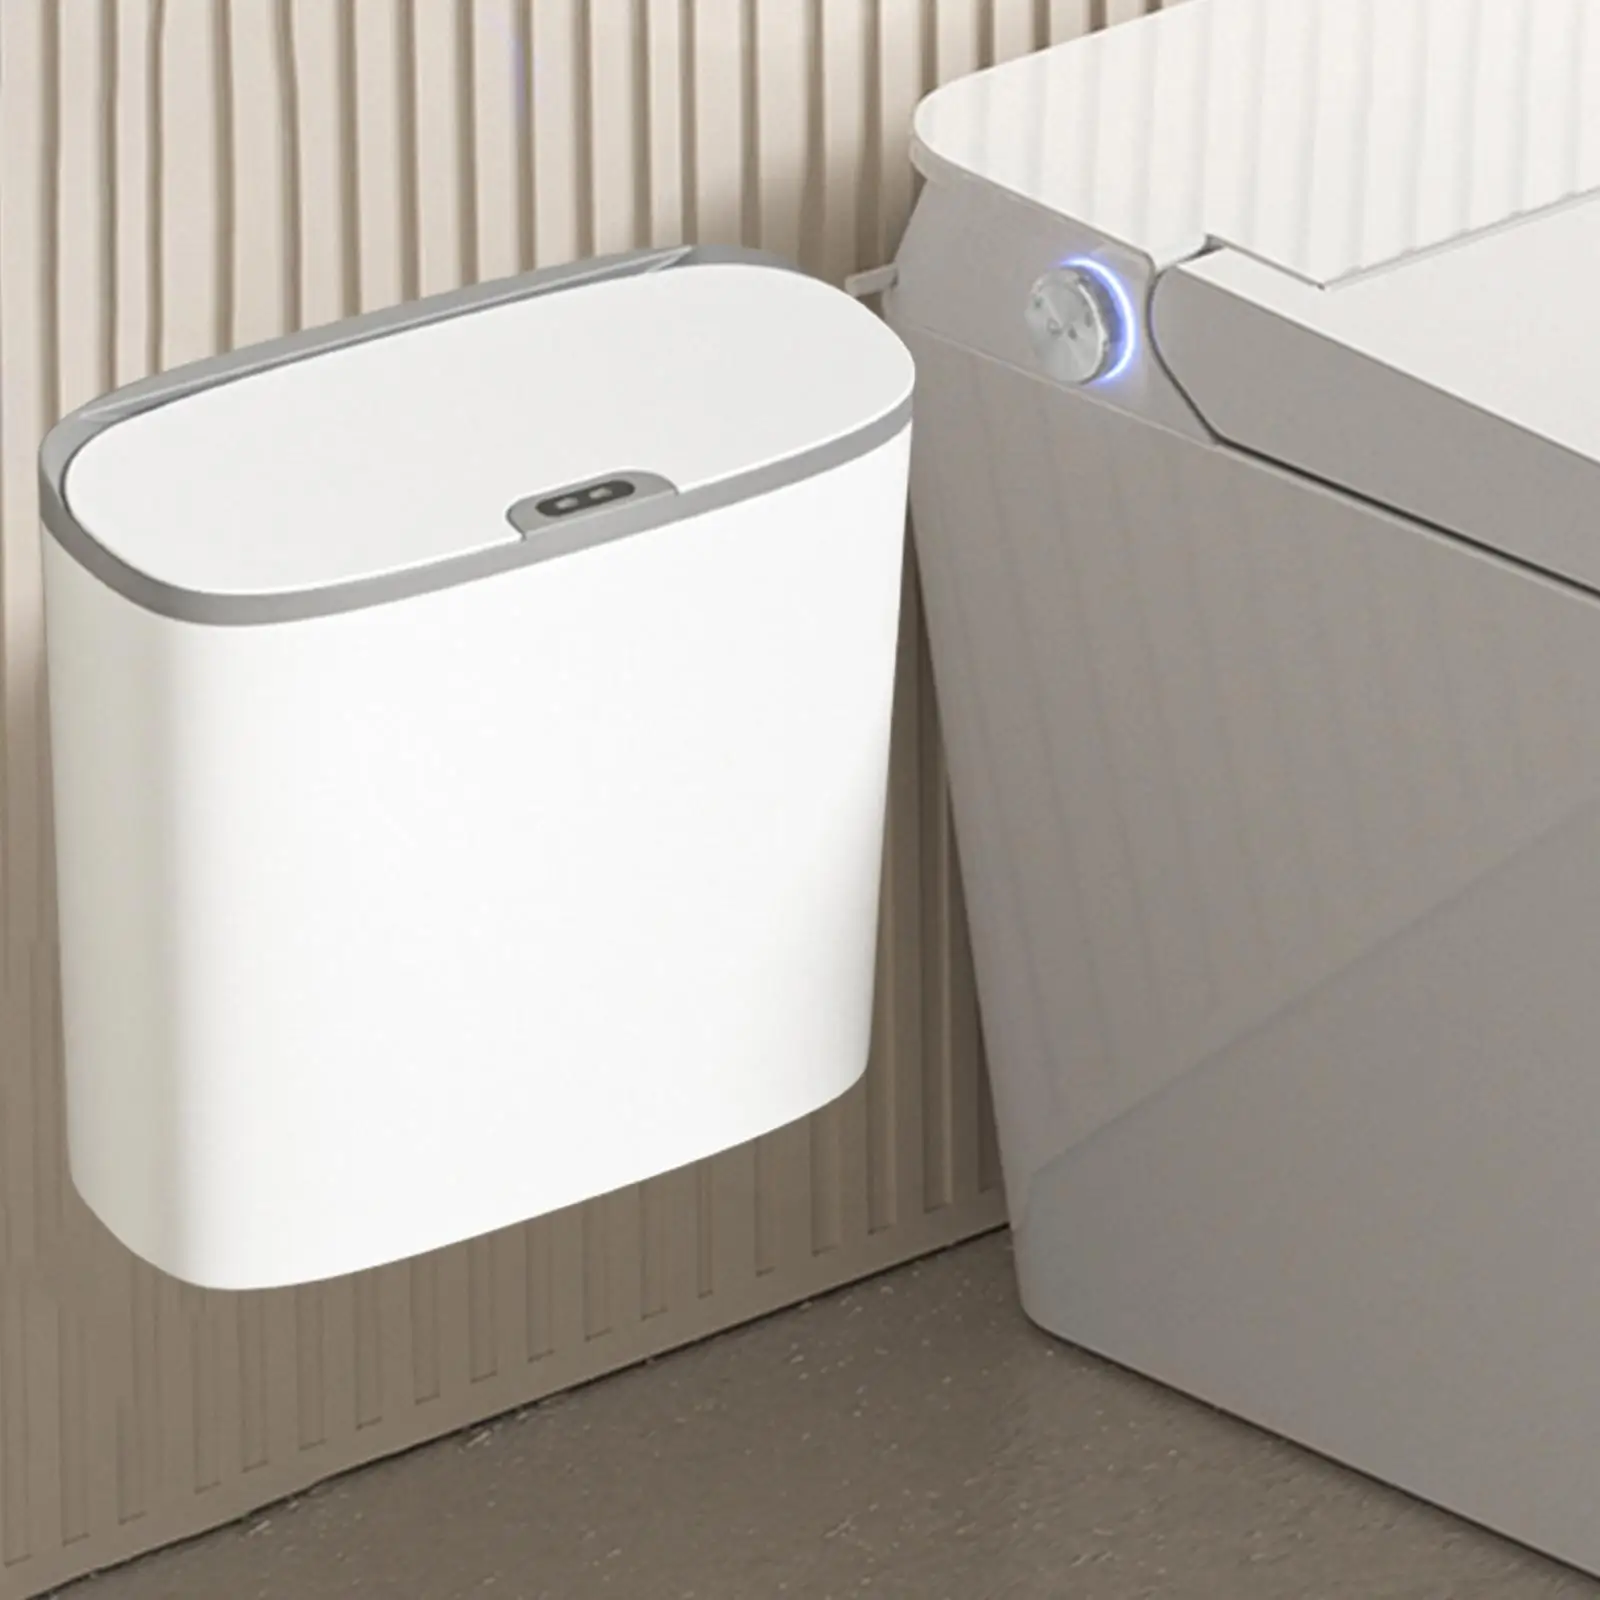 Smart Induction Trash Bin Automatic 14L Capacity Kitchen Garbage Bin Rubbish Bin for Home Office Bathroom Laundry Living Room